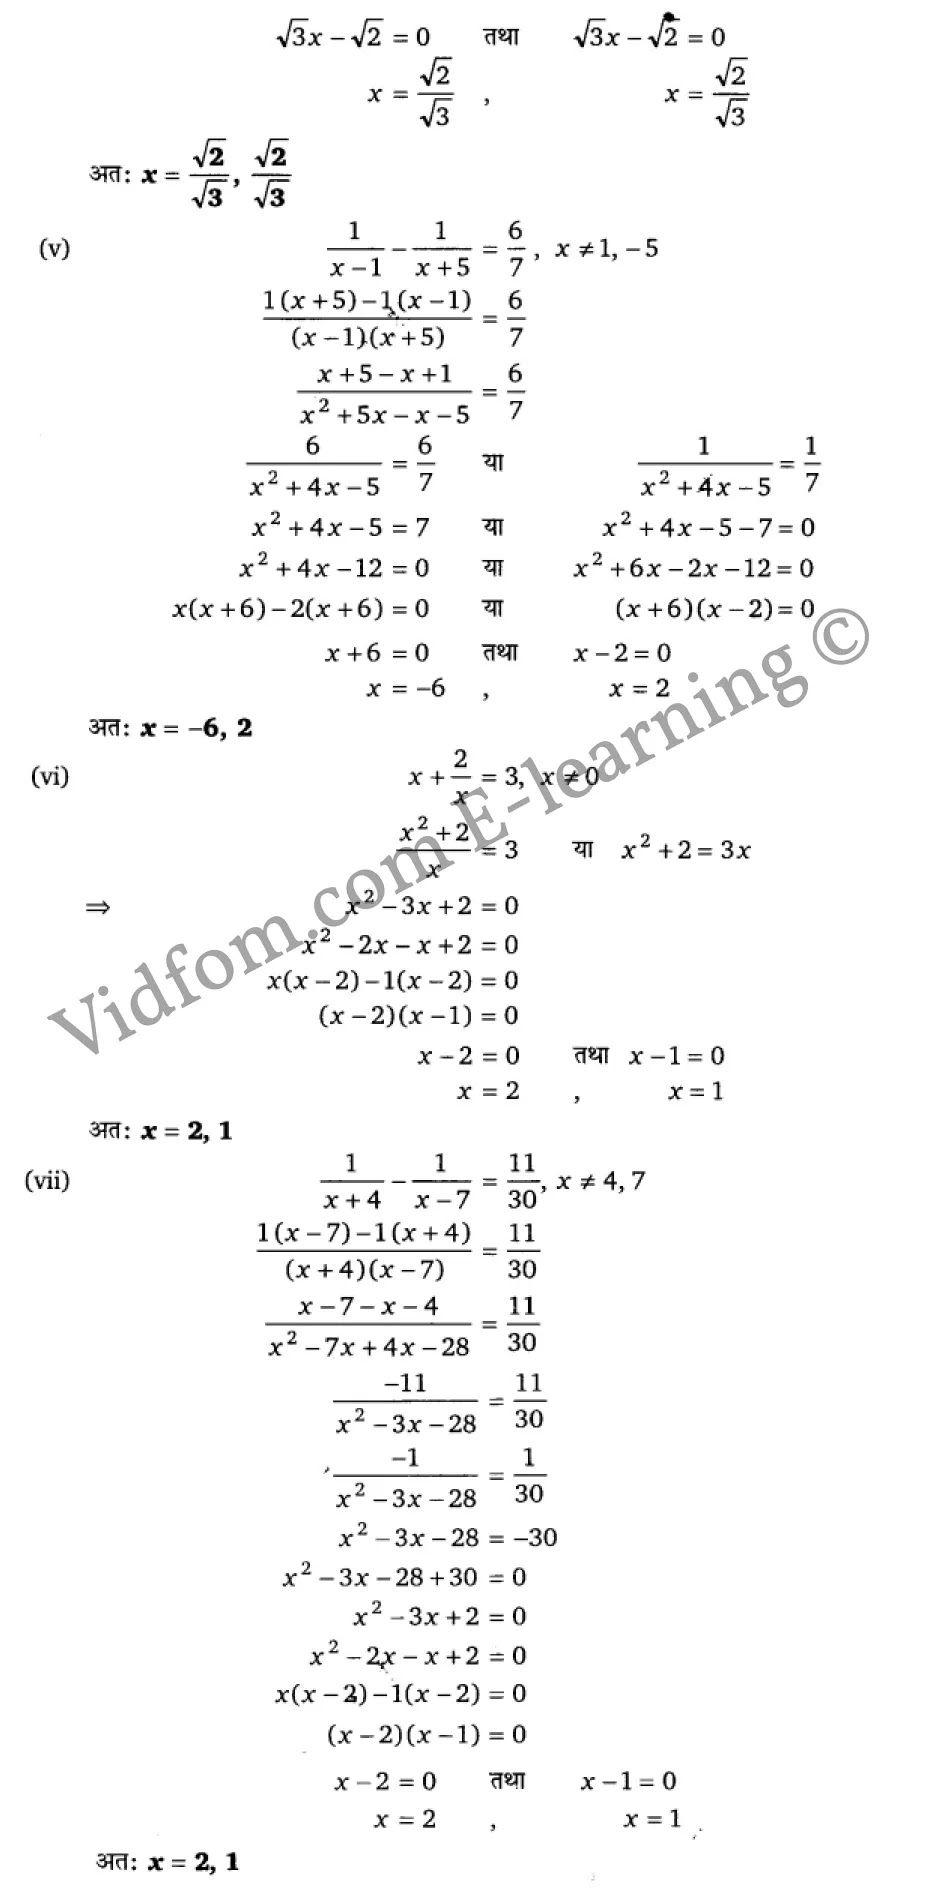 Class 10 Chapter 4 Quadratic Equations (द्विघात समीकरण)  Chapter 4 Quadratic Equations Ex 4.1 Chapter 4 Quadratic Equations Ex 4.2 Chapter 4 Quadratic Equations Ex 4.3 Chapter 4 Quadratic Equations Ex 4.4 Chapter 4 Quadratic Equations Ex 4.5 कक्षा 10 बालाजी गणित  के नोट्स  हिंदी में एनसीईआरटी समाधान,     class 10 Balaji Maths Chapter 4,   class 10 Balaji Maths Chapter 4 ncert solutions in Hindi,   class 10 Balaji Maths Chapter 4 notes in hindi,   class 10 Balaji Maths Chapter 4 question answer,   class 10 Balaji Maths Chapter 4 notes,   class 10 Balaji Maths Chapter 4 class 10 Balaji Maths Chapter 4 in  hindi,    class 10 Balaji Maths Chapter 4 important questions in  hindi,   class 10 Balaji Maths Chapter 4 notes in hindi,    class 10 Balaji Maths Chapter 4 test,   class 10 Balaji Maths Chapter 4 pdf,   class 10 Balaji Maths Chapter 4 notes pdf,   class 10 Balaji Maths Chapter 4 exercise solutions,   class 10 Balaji Maths Chapter 4 notes study rankers,   class 10 Balaji Maths Chapter 4 notes,    class 10 Balaji Maths Chapter 4  class 10  notes pdf,   class 10 Balaji Maths Chapter 4 class 10  notes  ncert,   class 10 Balaji Maths Chapter 4 class 10 pdf,   class 10 Balaji Maths Chapter 4  book,   class 10 Balaji Maths Chapter 4 quiz class 10  ,    10  th class 10 Balaji Maths Chapter 4  book up board,   up board 10  th class 10 Balaji Maths Chapter 4 notes,  class 10 Balaji Maths,   class 10 Balaji Maths ncert solutions in Hindi,   class 10 Balaji Maths notes in hindi,   class 10 Balaji Maths question answer,   class 10 Balaji Maths notes,  class 10 Balaji Maths class 10 Balaji Maths Chapter 4 in  hindi,    class 10 Balaji Maths important questions in  hindi,   class 10 Balaji Maths notes in hindi,    class 10 Balaji Maths test,  class 10 Balaji Maths class 10 Balaji Maths Chapter 4 pdf,   class 10 Balaji Maths notes pdf,   class 10 Balaji Maths exercise solutions,   class 10 Balaji Maths,  class 10 Balaji Maths notes study rankers,   class 10 Balaji Maths notes,  class 10 Balaji Maths notes,   class 10 Balaji Maths  class 10  notes pdf,   class 10 Balaji Maths class 10  notes  ncert,   class 10 Balaji Maths class 10 pdf,   class 10 Balaji Maths  book,  class 10 Balaji Maths quiz class 10  ,  10  th class 10 Balaji Maths    book up board,    up board 10  th class 10 Balaji Maths notes,      कक्षा 10 बालाजी गणित अध्याय 4 ,  कक्षा 10 बालाजी गणित, कक्षा 10 बालाजी गणित अध्याय 4  के नोट्स हिंदी में,  कक्षा 10 का हिंदी अध्याय 4 का प्रश्न उत्तर,  कक्षा 10 बालाजी गणित अध्याय 4  के नोट्स,  10 कक्षा बालाजी गणित  हिंदी में, कक्षा 10 बालाजी गणित अध्याय 4  हिंदी में,  कक्षा 10 बालाजी गणित अध्याय 4  महत्वपूर्ण प्रश्न हिंदी में, कक्षा 10   हिंदी के नोट्स  हिंदी में, बालाजी गणित हिंदी में  कक्षा 10 नोट्स pdf,    बालाजी गणित हिंदी में  कक्षा 10 नोट्स 2021 ncert,   बालाजी गणित हिंदी  कक्षा 10 pdf,   बालाजी गणित हिंदी में  पुस्तक,   बालाजी गणित हिंदी में की बुक,   बालाजी गणित हिंदी में  प्रश्नोत्तरी class 10 ,  बिहार बोर्ड 10  पुस्तक वीं हिंदी नोट्स,    बालाजी गणित कक्षा 10 नोट्स 2021 ncert,   बालाजी गणित  कक्षा 10 pdf,   बालाजी गणित  पुस्तक,   बालाजी गणित  प्रश्नोत्तरी class 10, कक्षा 10 बालाजी गणित,  कक्षा 10 बालाजी गणित  के नोट्स हिंदी में,  कक्षा 10 का हिंदी का प्रश्न उत्तर,  कक्षा 10 बालाजी गणित  के नोट्स,  10 कक्षा हिंदी 2021  हिंदी में, कक्षा 10 बालाजी गणित  हिंदी में,  कक्षा 10 बालाजी गणित  महत्वपूर्ण प्रश्न हिंदी में, कक्षा 10 बालाजी गणित  नोट्स  हिंदी में,